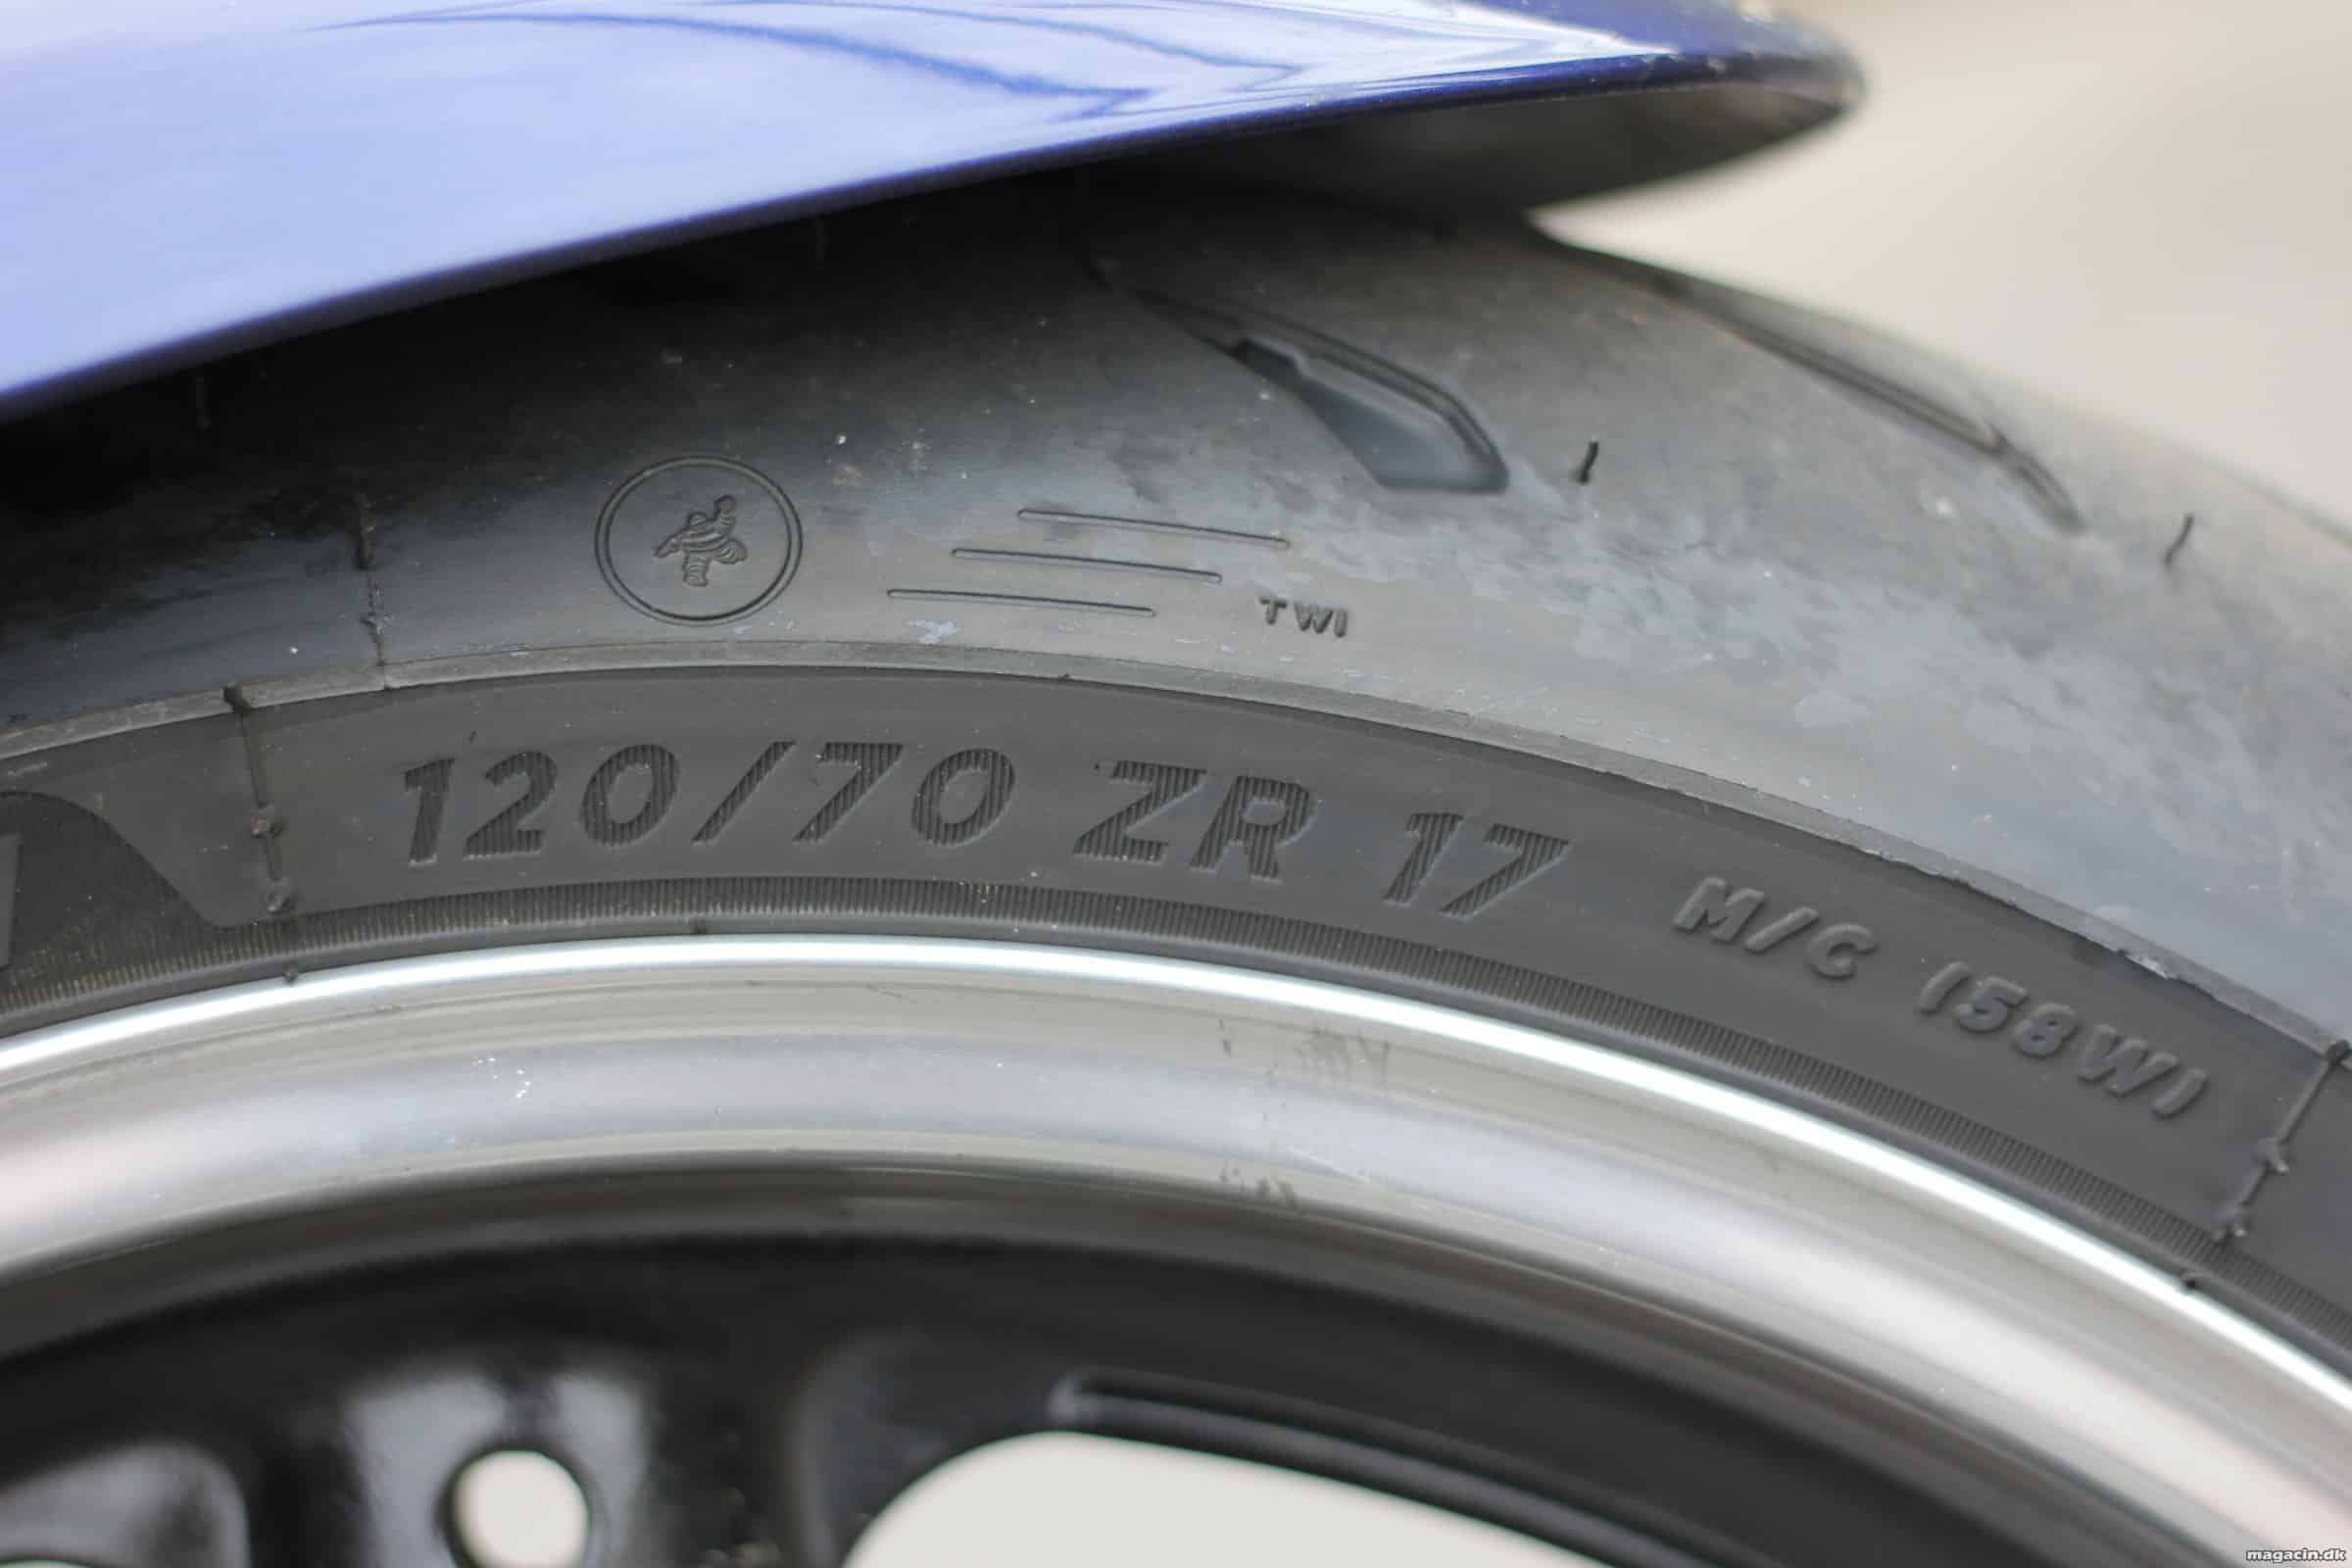 Dæktest: Michelin Road V med ny teknologi